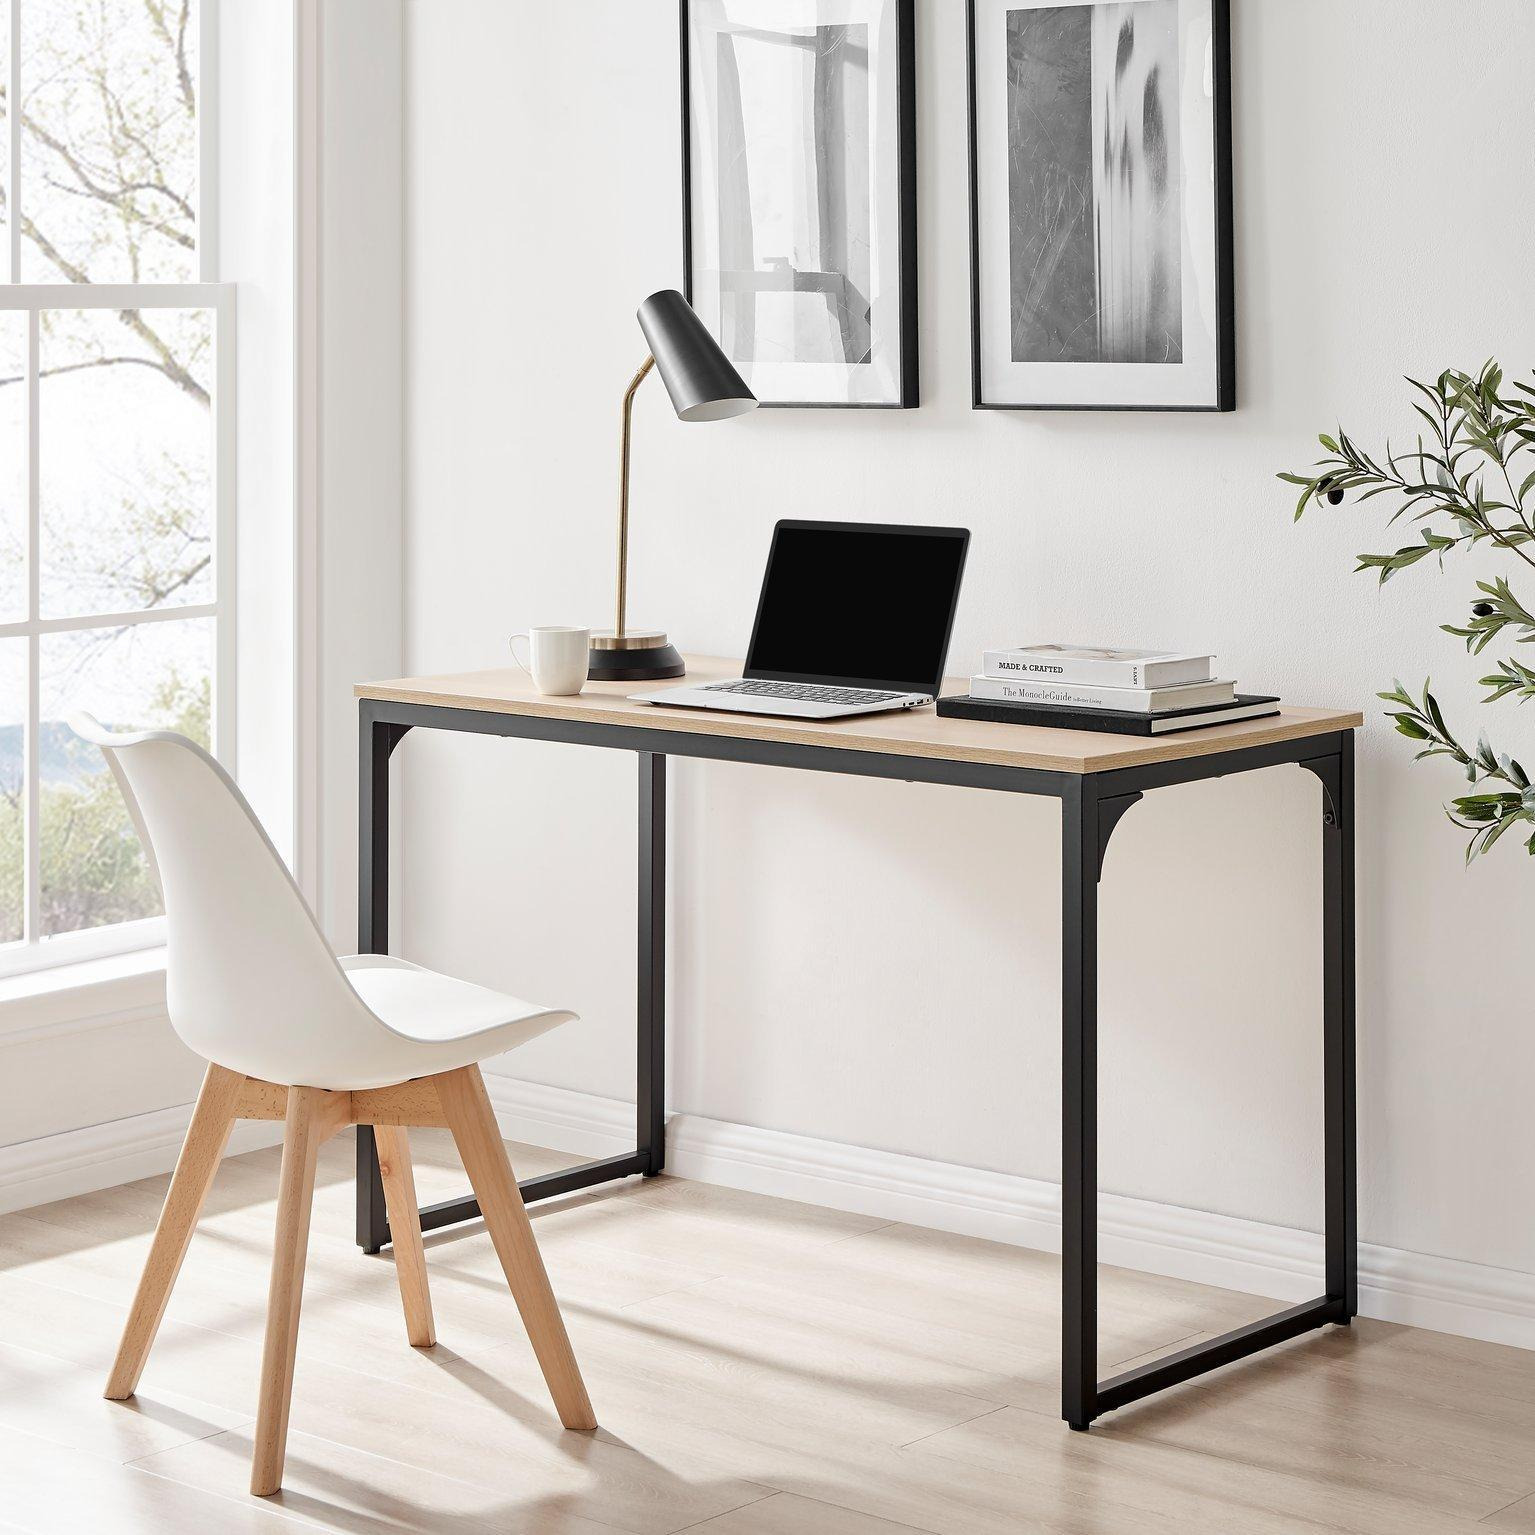 Kendrick 120cm Melamine Coated Home Office Computer Desk with Black Legs - image 1